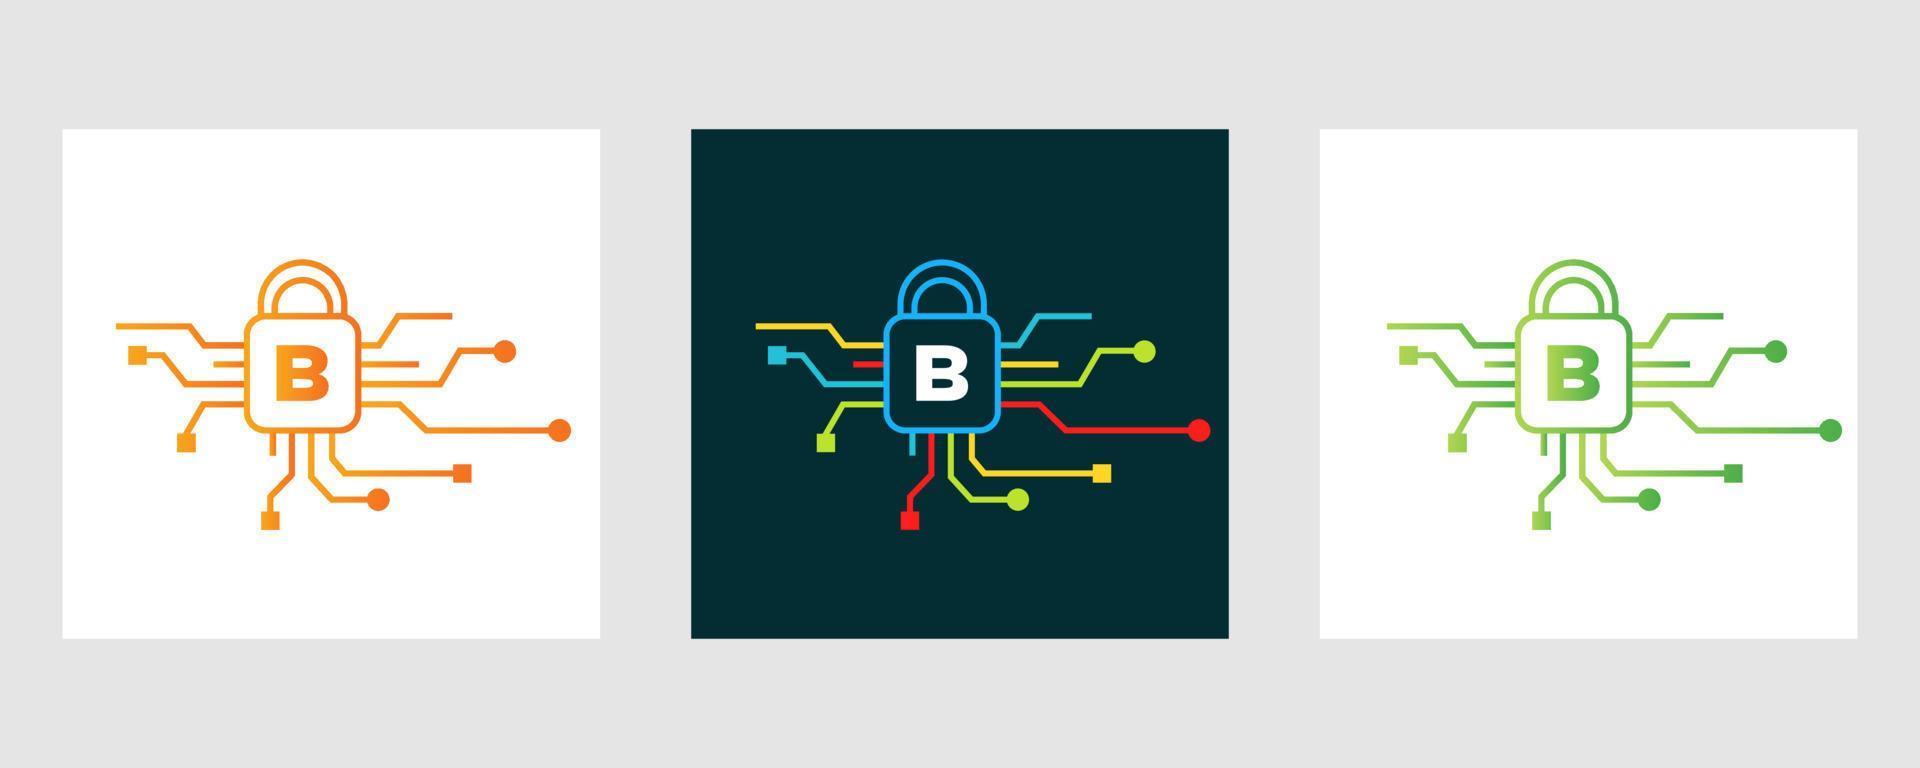 brief b cyber veiligheid logo. internet veiligheid teken, cyber bescherming, technologie, biotechnologie symbool vector